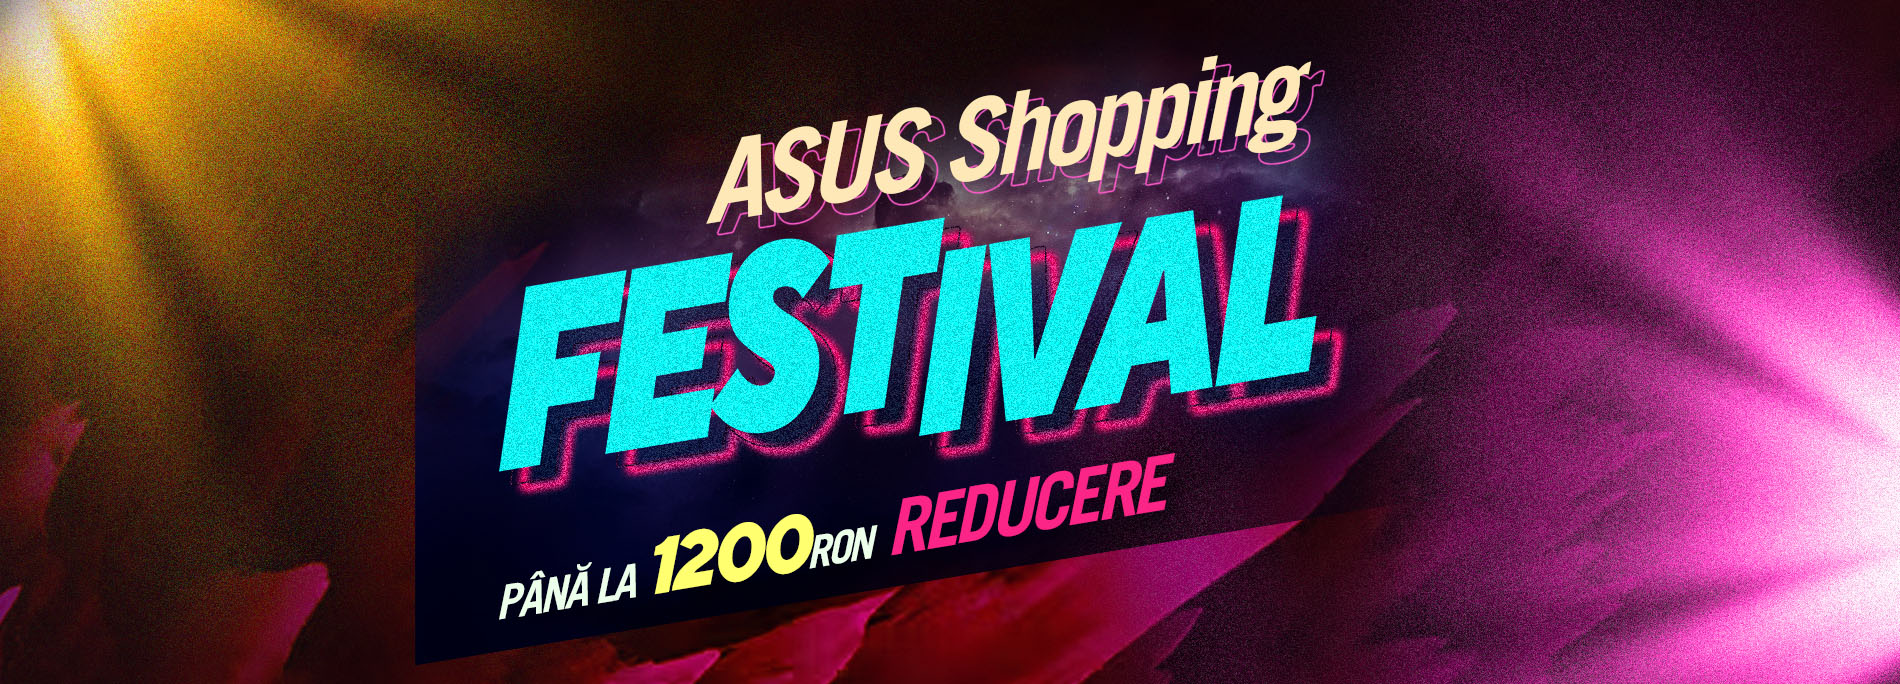 ASUS Shopping FESTIVAL